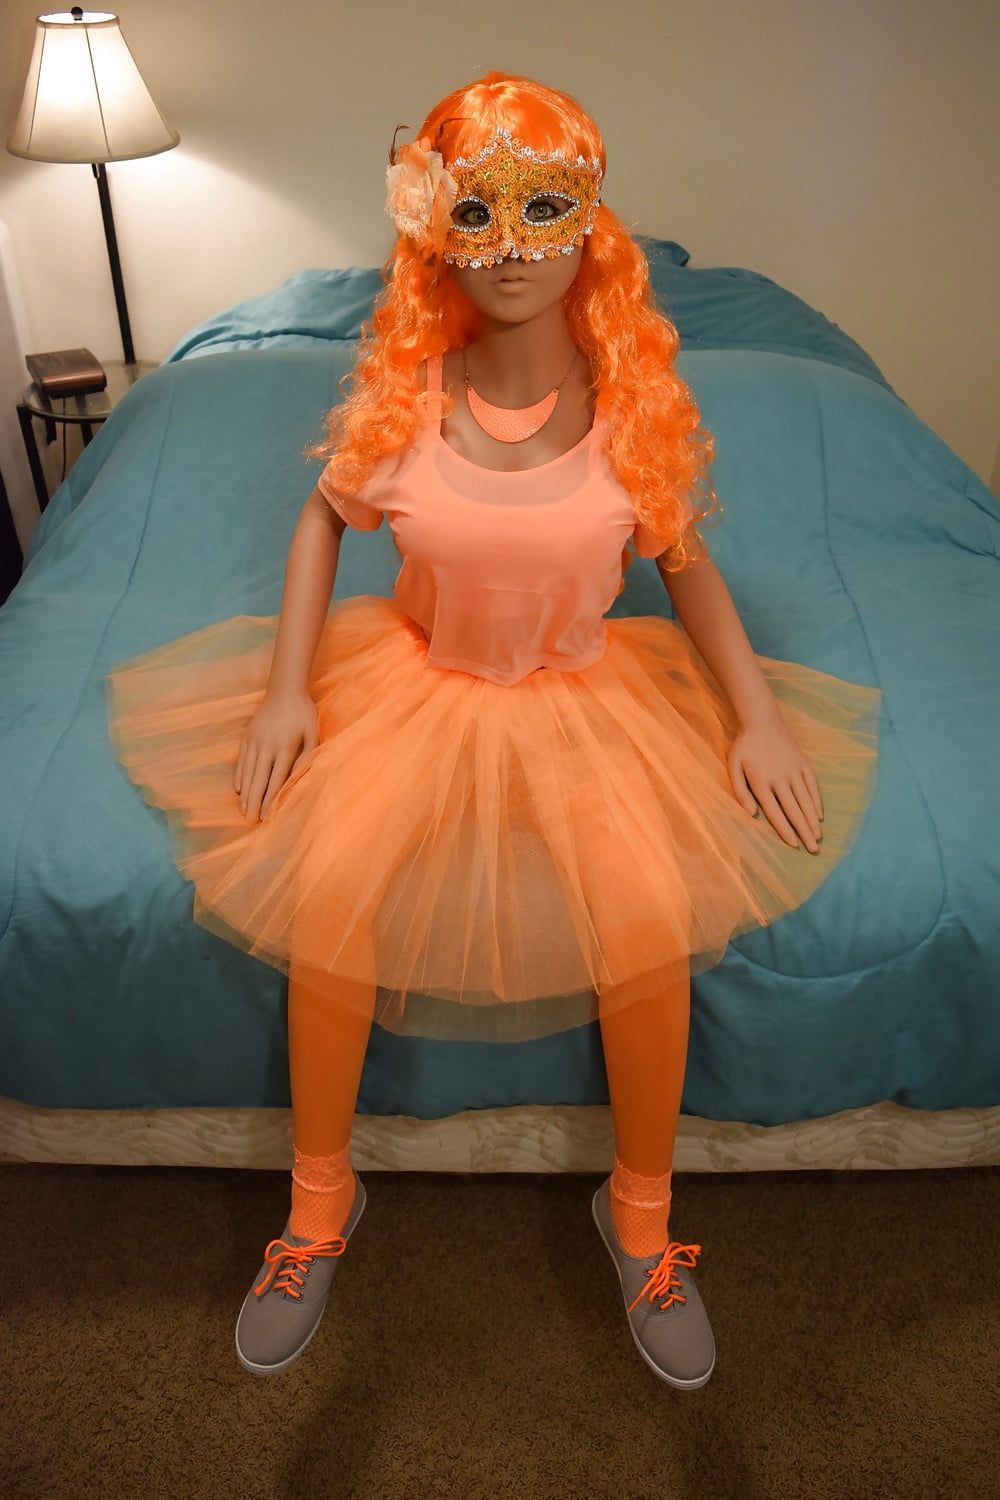 Nina's orange dream